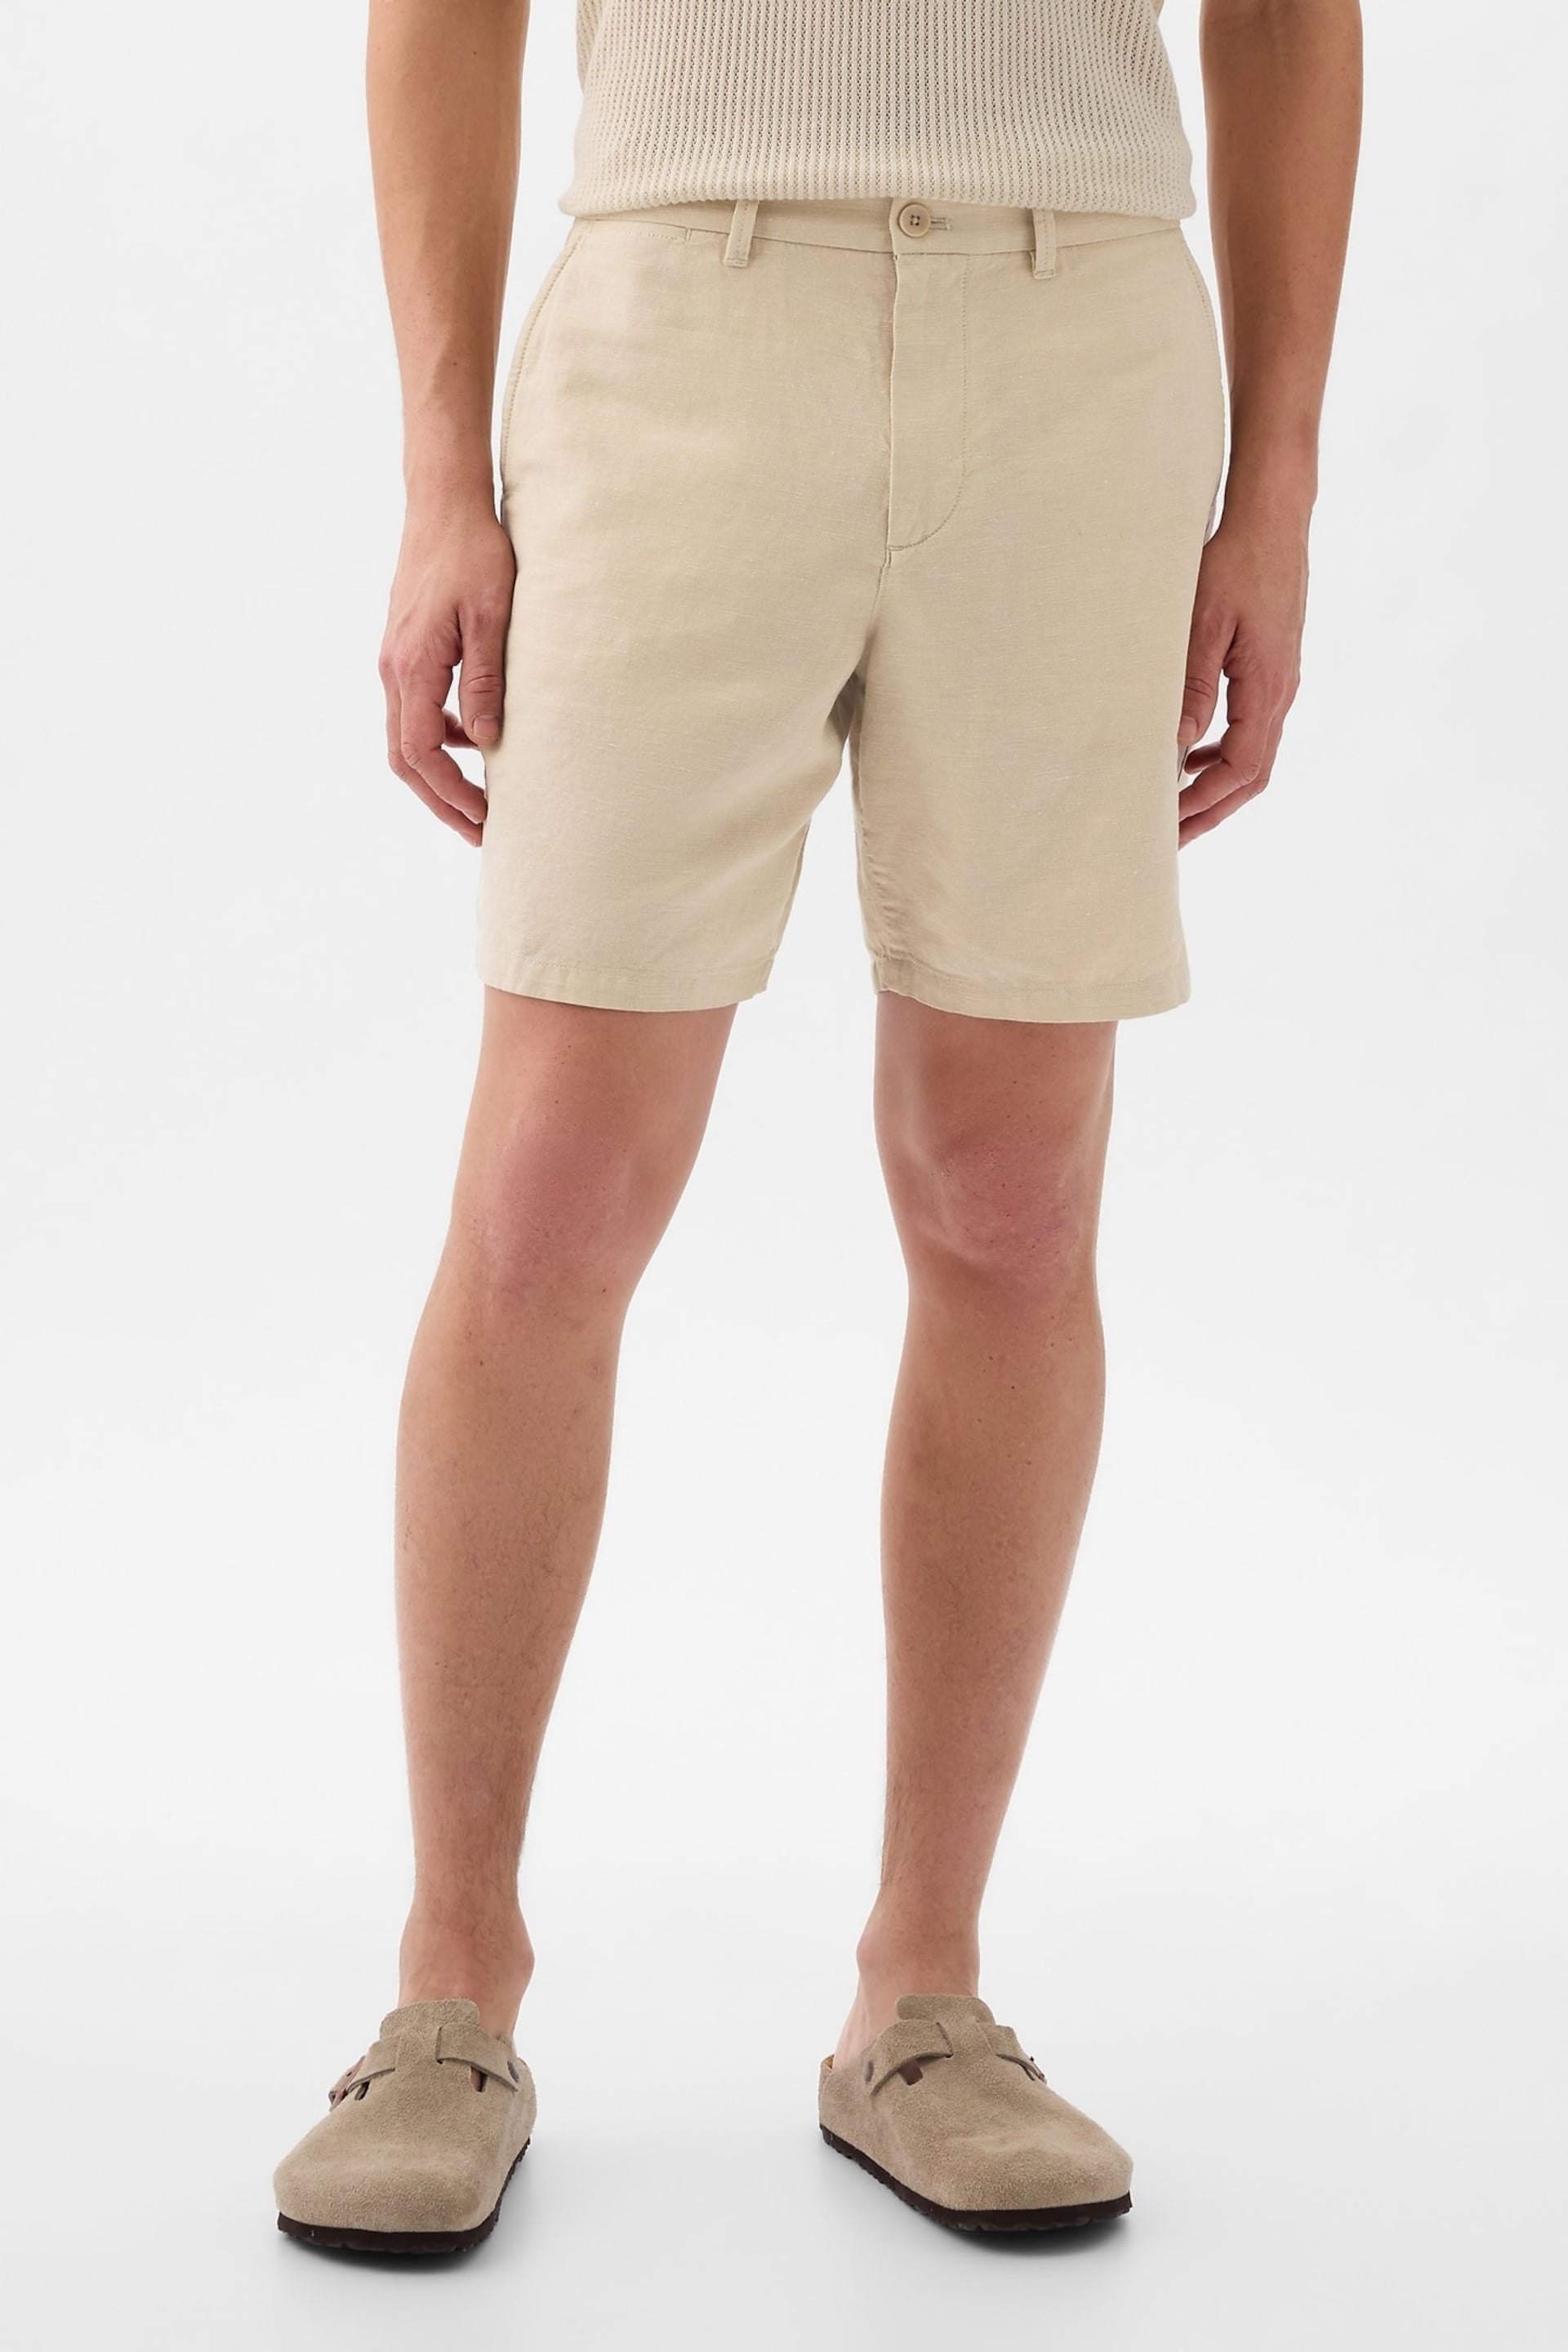 Gap Cream Linen Cotton Flat Front Shorts - Image 1 of 5